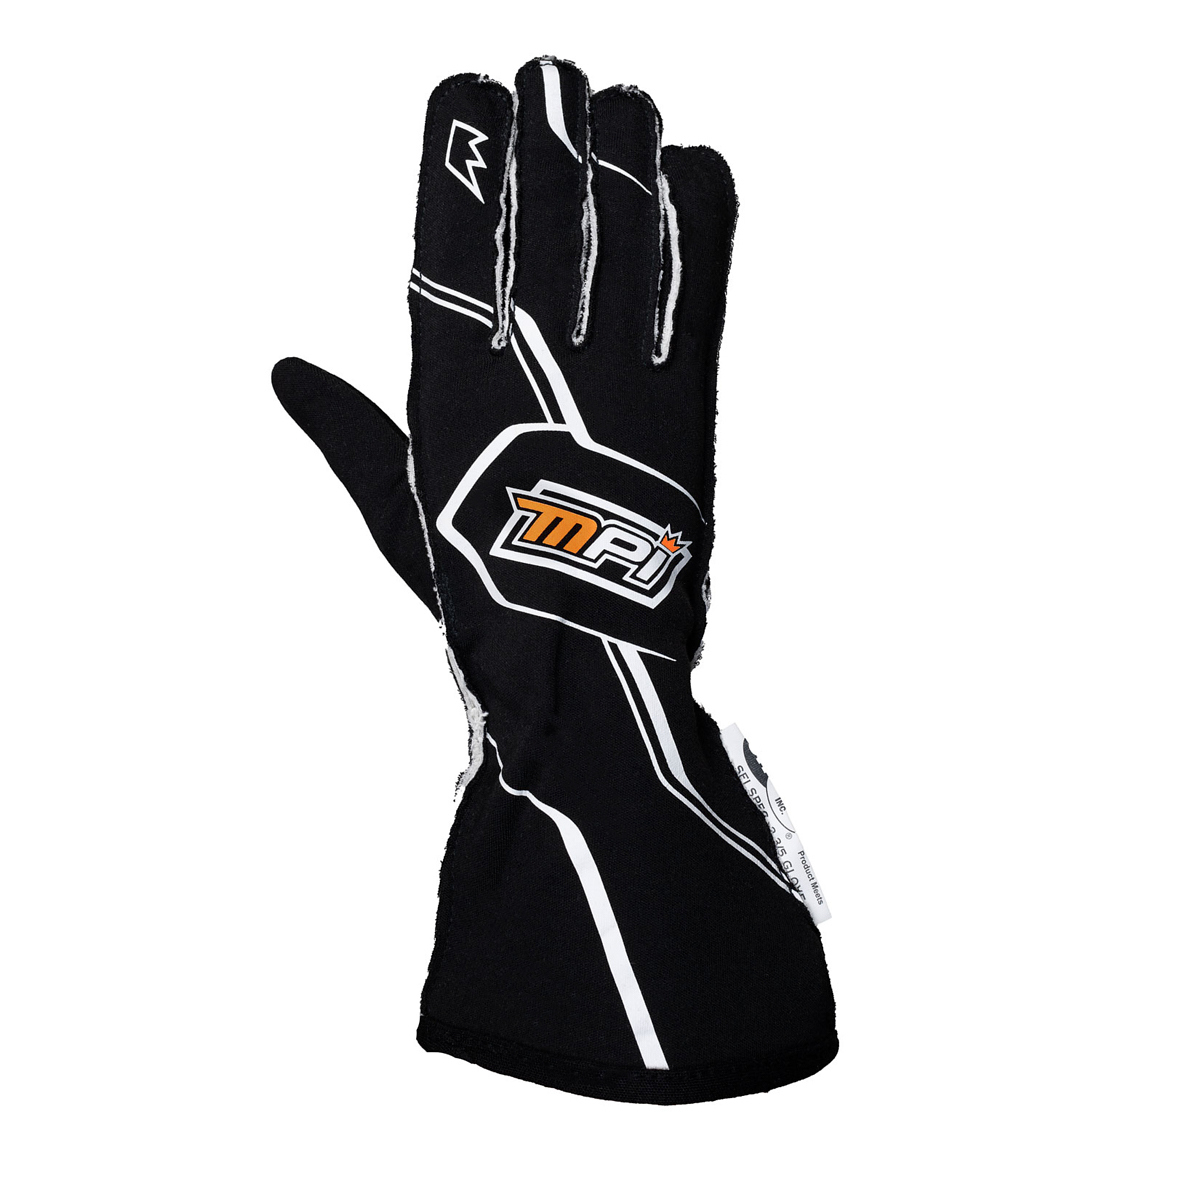 MPI USA MPI-GL-B-L Driving Gloves, SFI 3.3/5, Double Layer, Nomex, Padded Palm, Black / White, Large, Pair